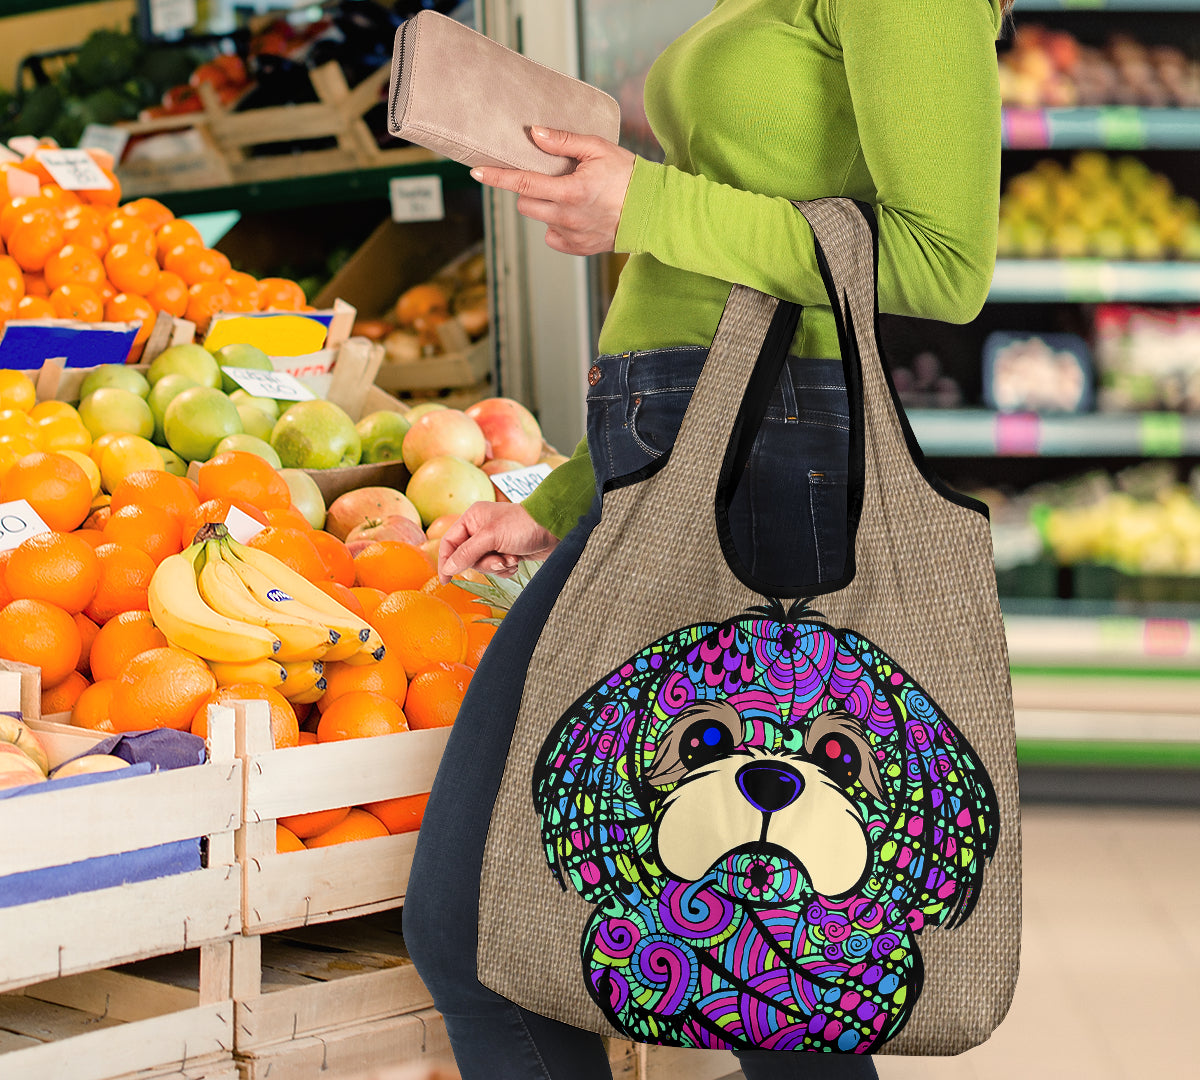 Shih Tzu Design 3 Pack Grocery Bags - Arts by Cindy Sang - JillnJacks Exclusive